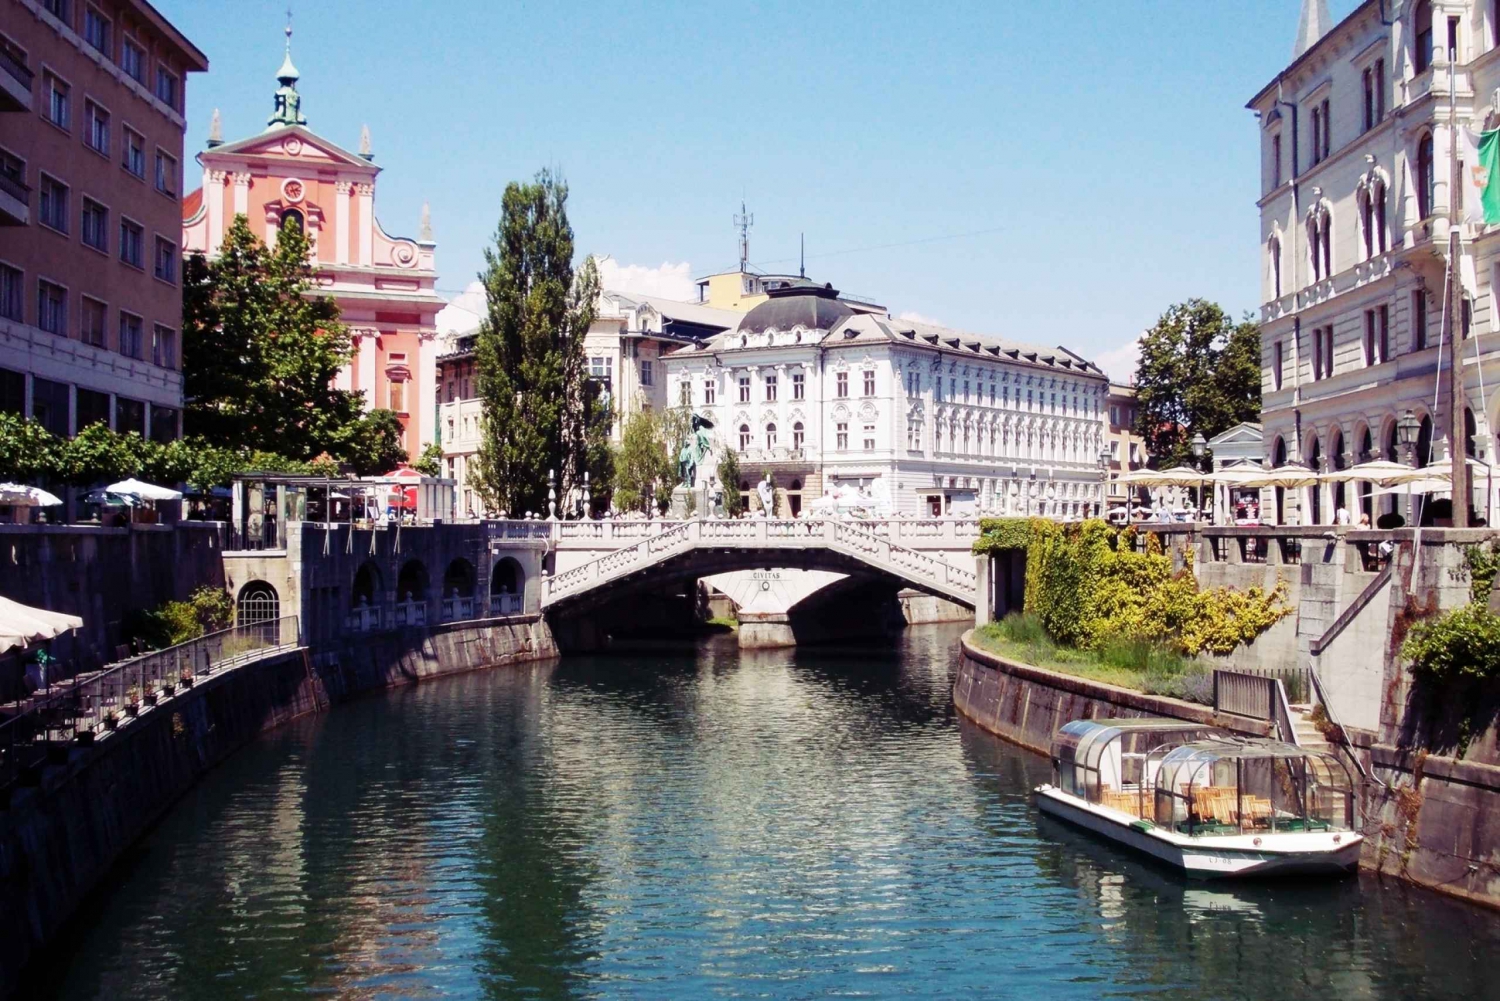 From Koper: Ljubljana Private Walking Tour with Transfers